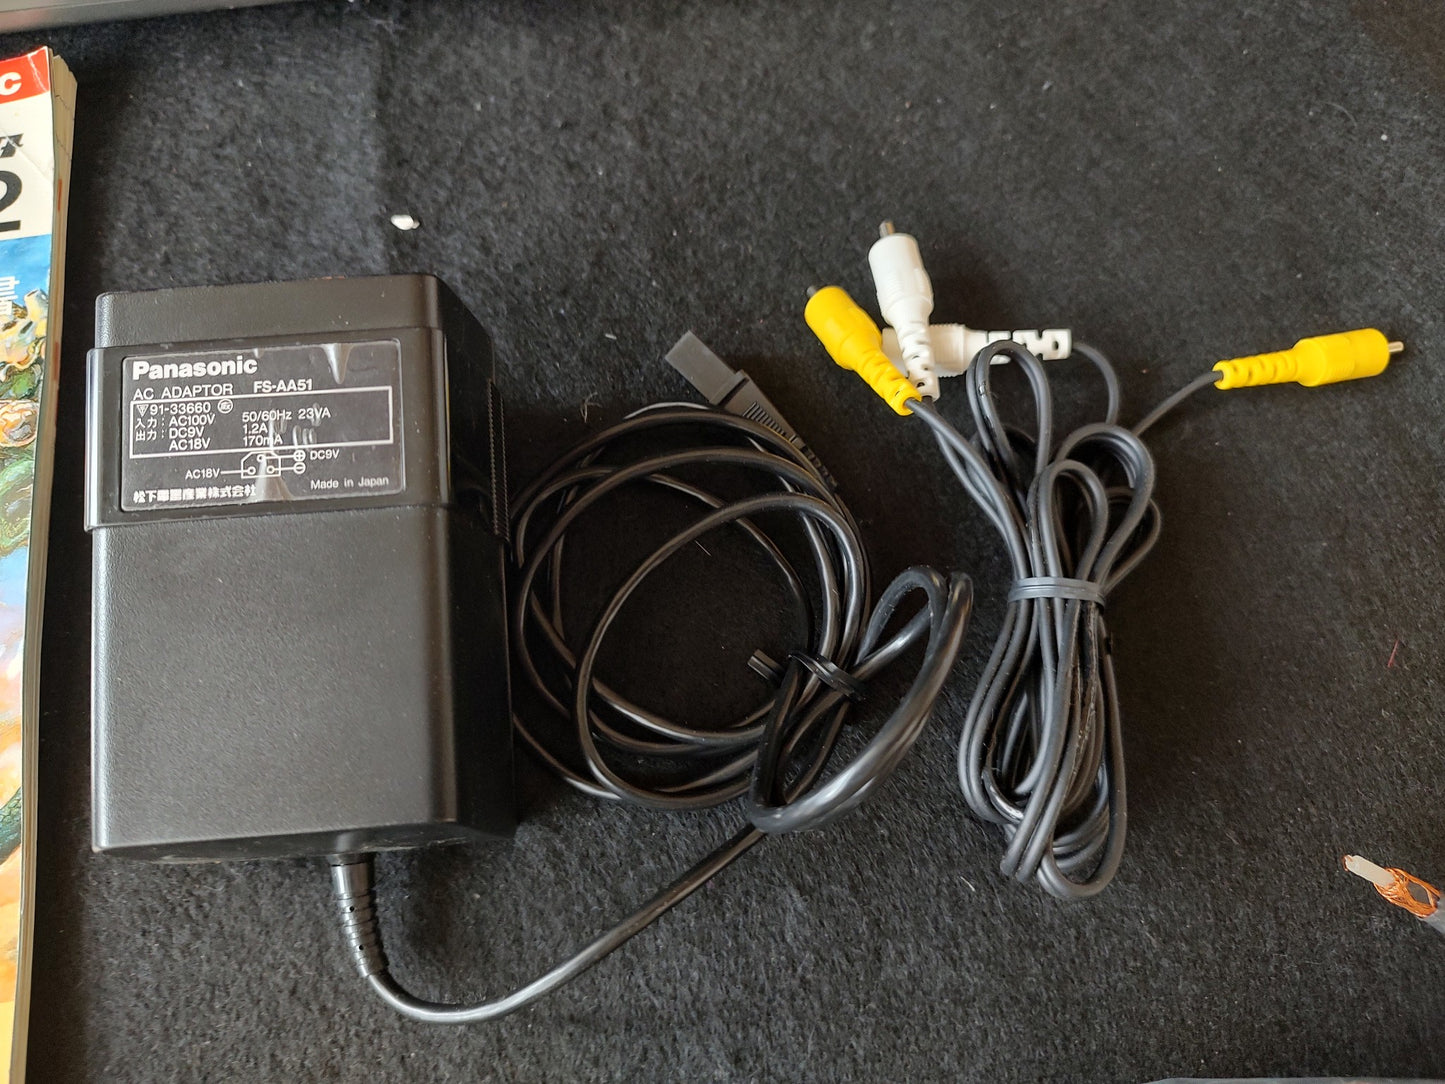 Panasonic MSX2 FS-A1 MK2 Personal Computer, PSU, AV cable, Manual, Working-f0730